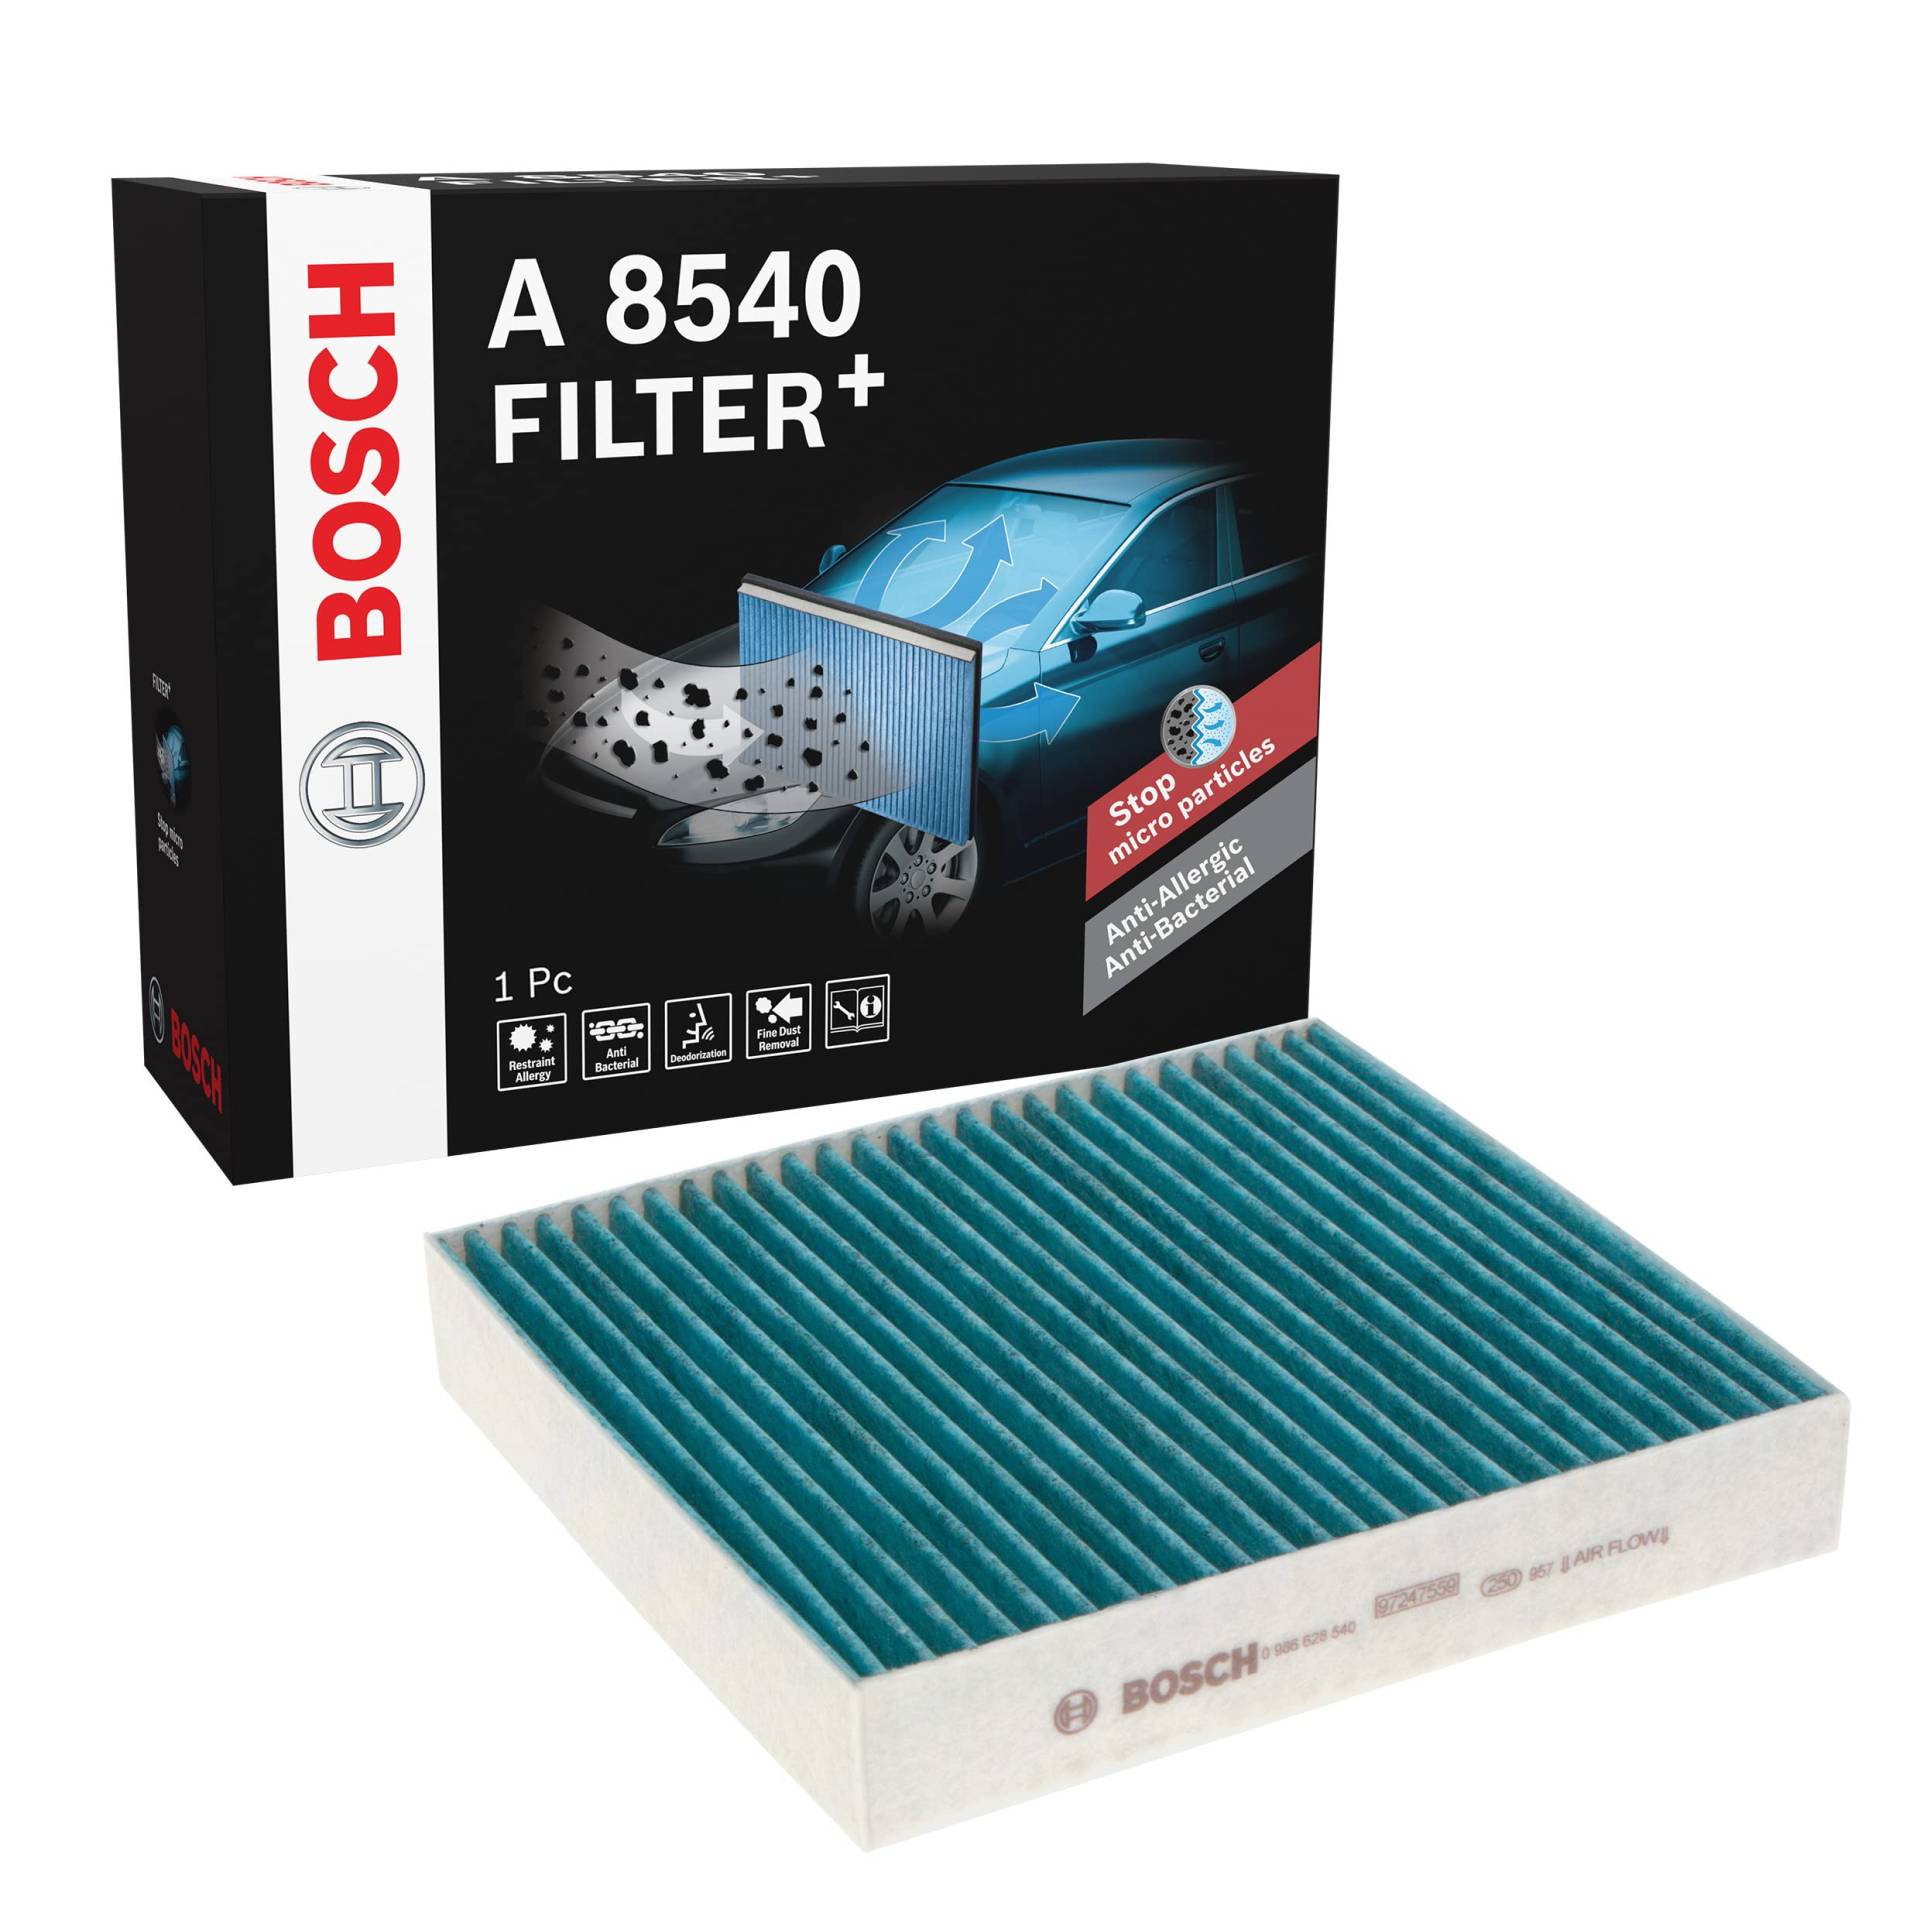 Bosch A8540 - Innenraumfilter Filter+ von Bosch Automotive